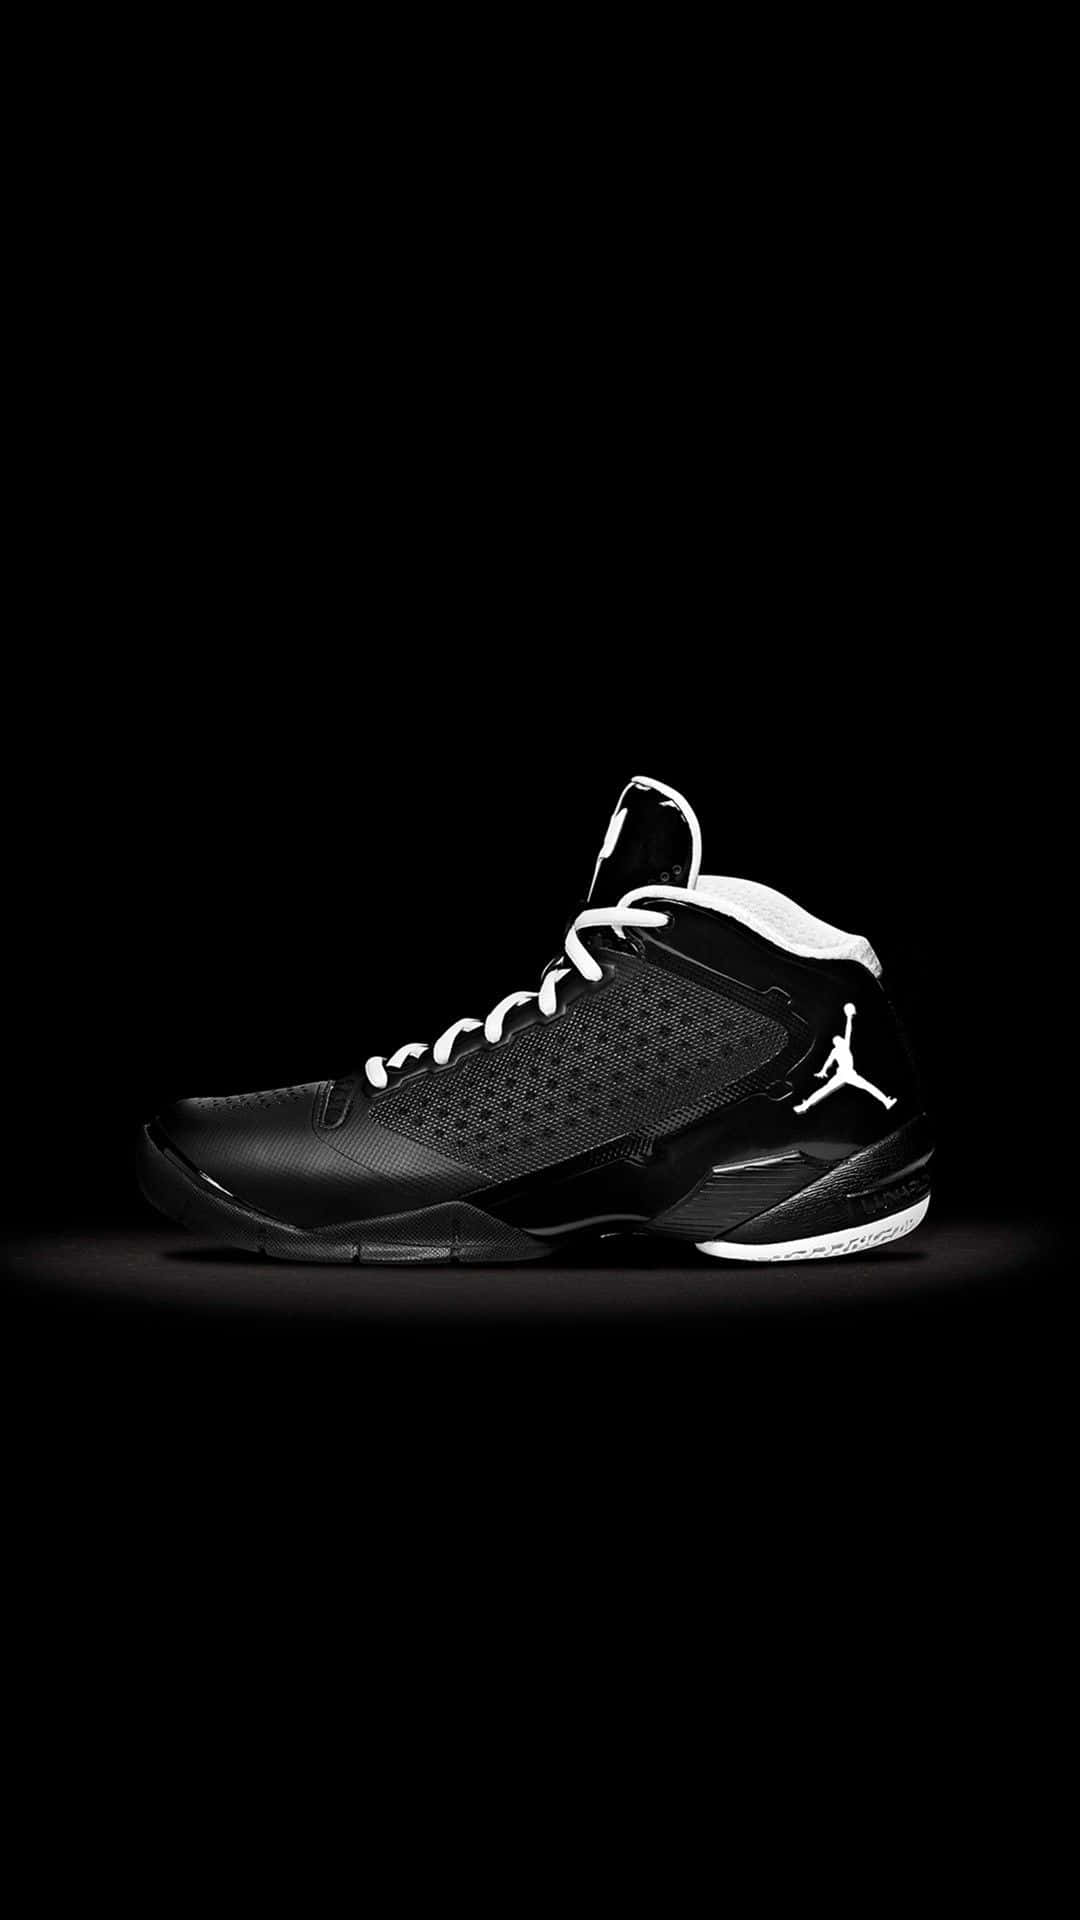 Jordan Xiii - Black And White Basketball Shoe Background